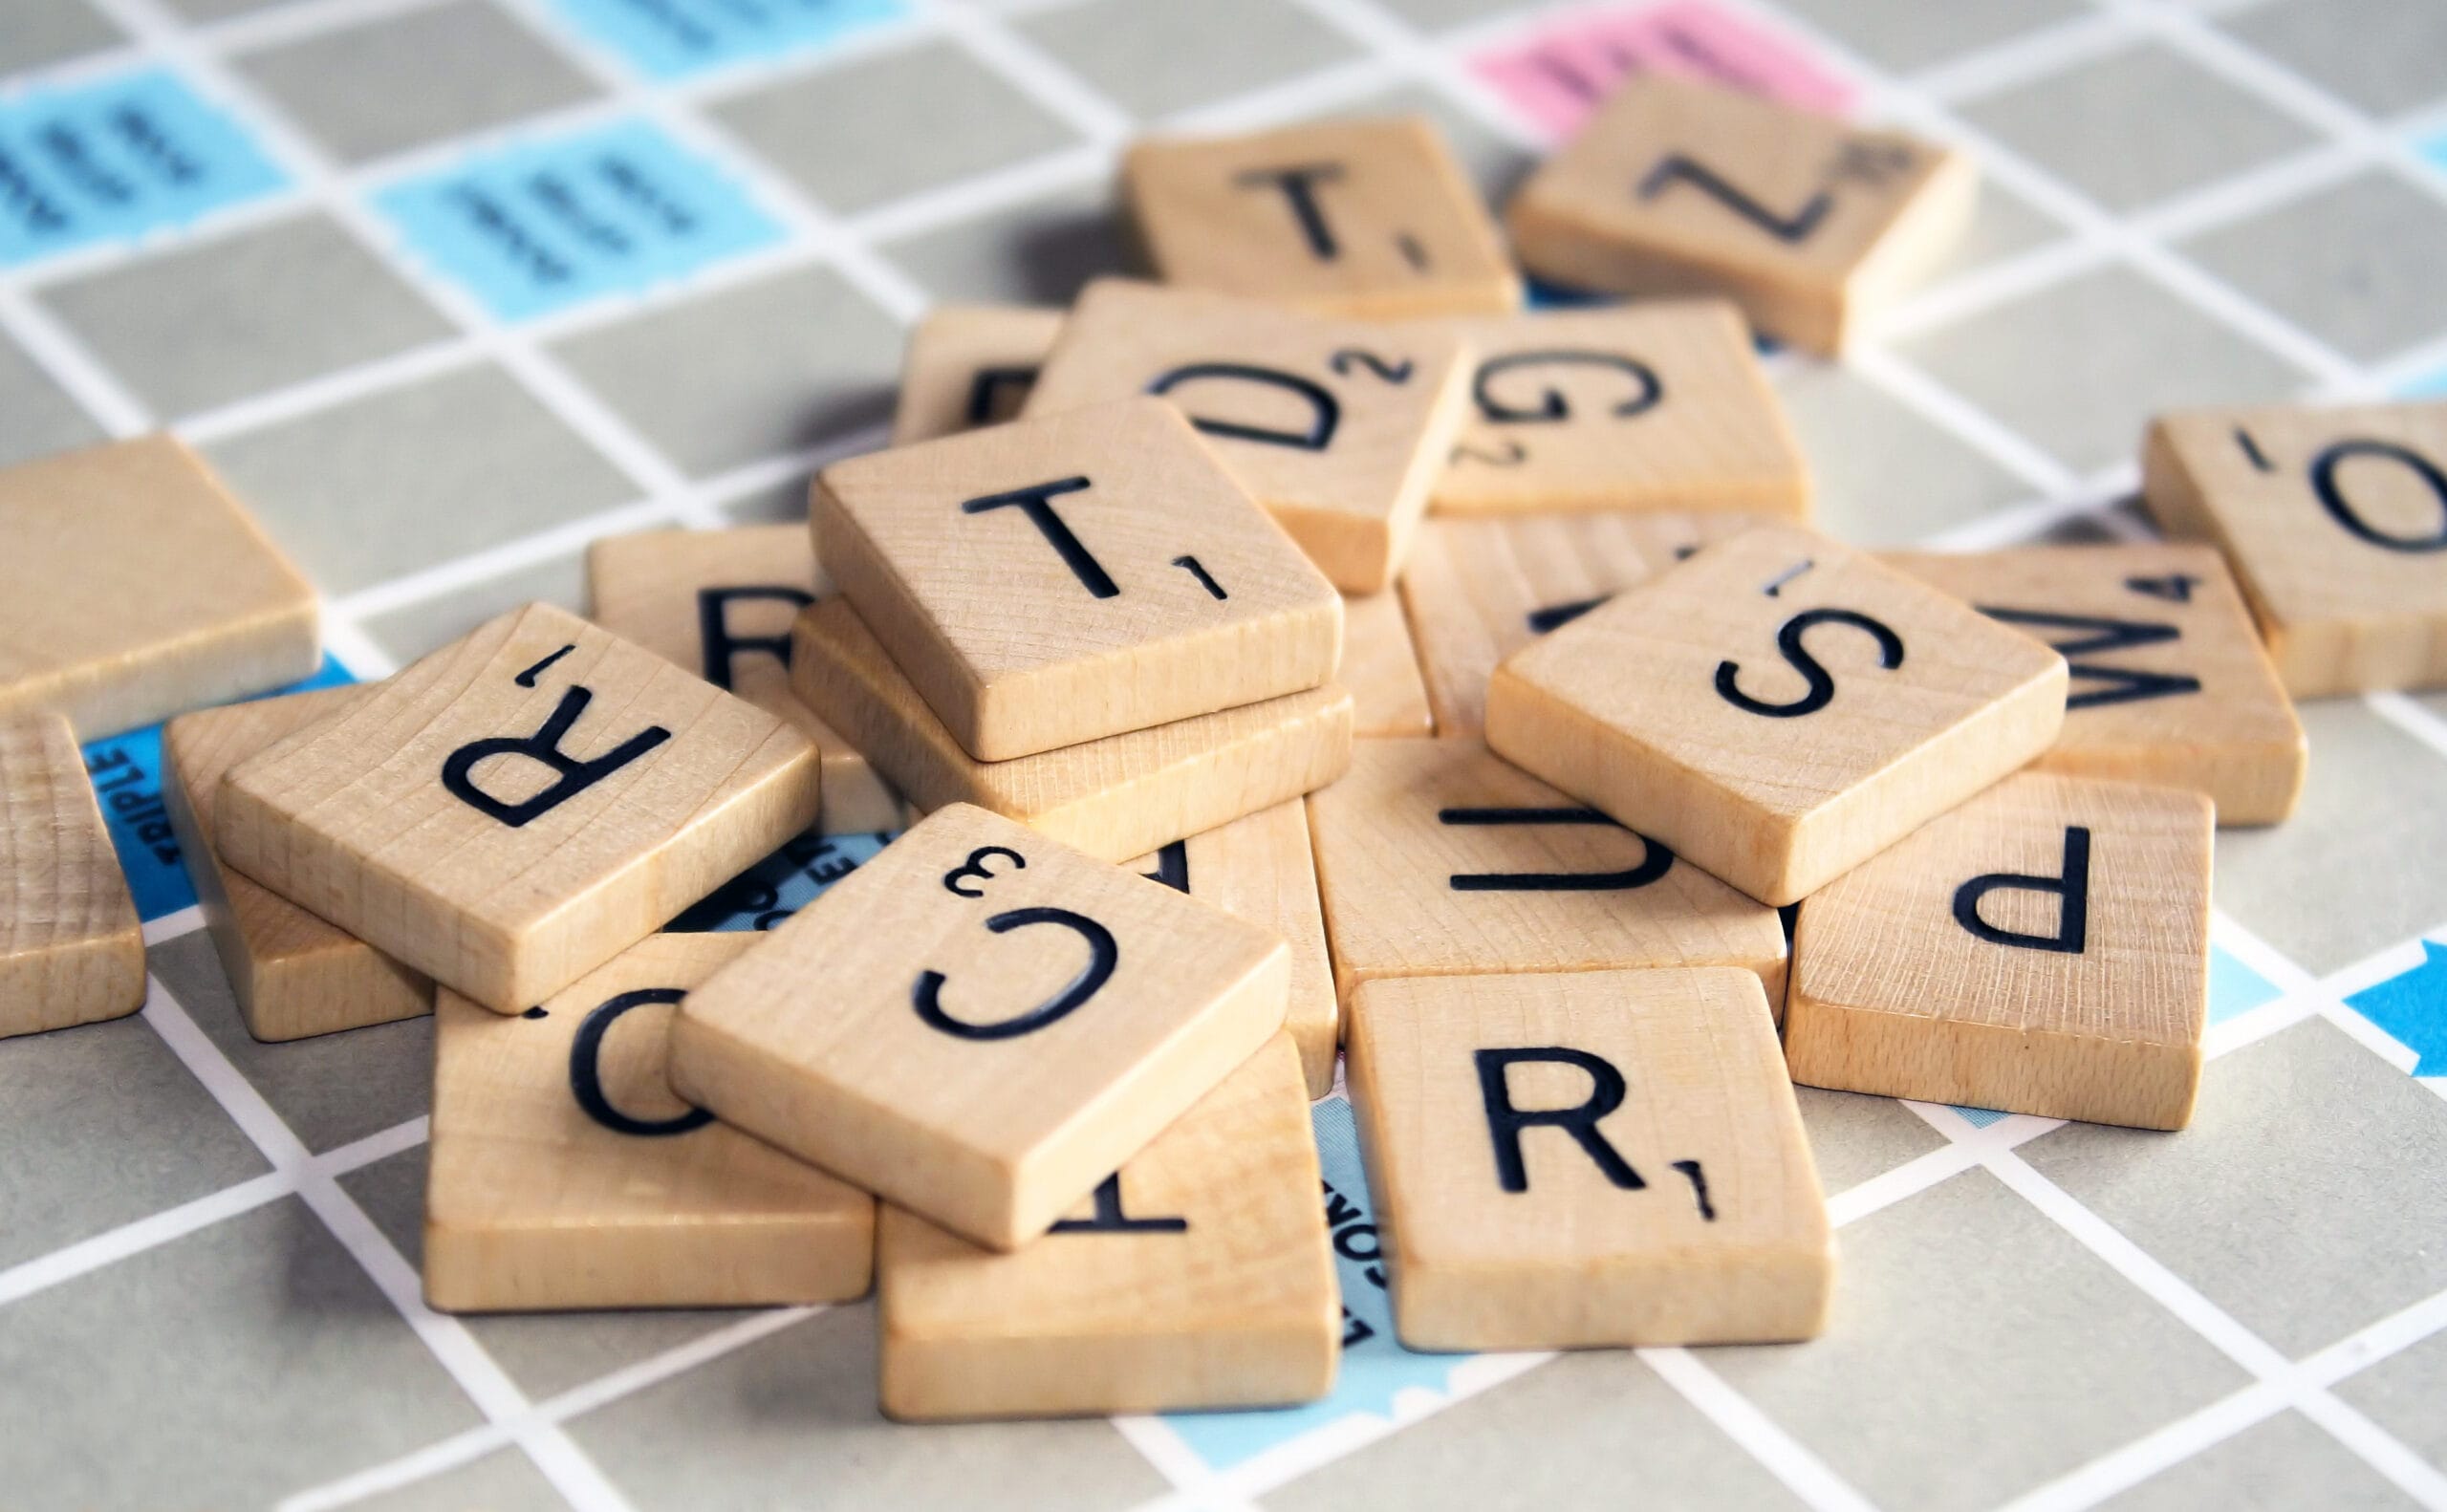 National Scrabble Day (April 13)